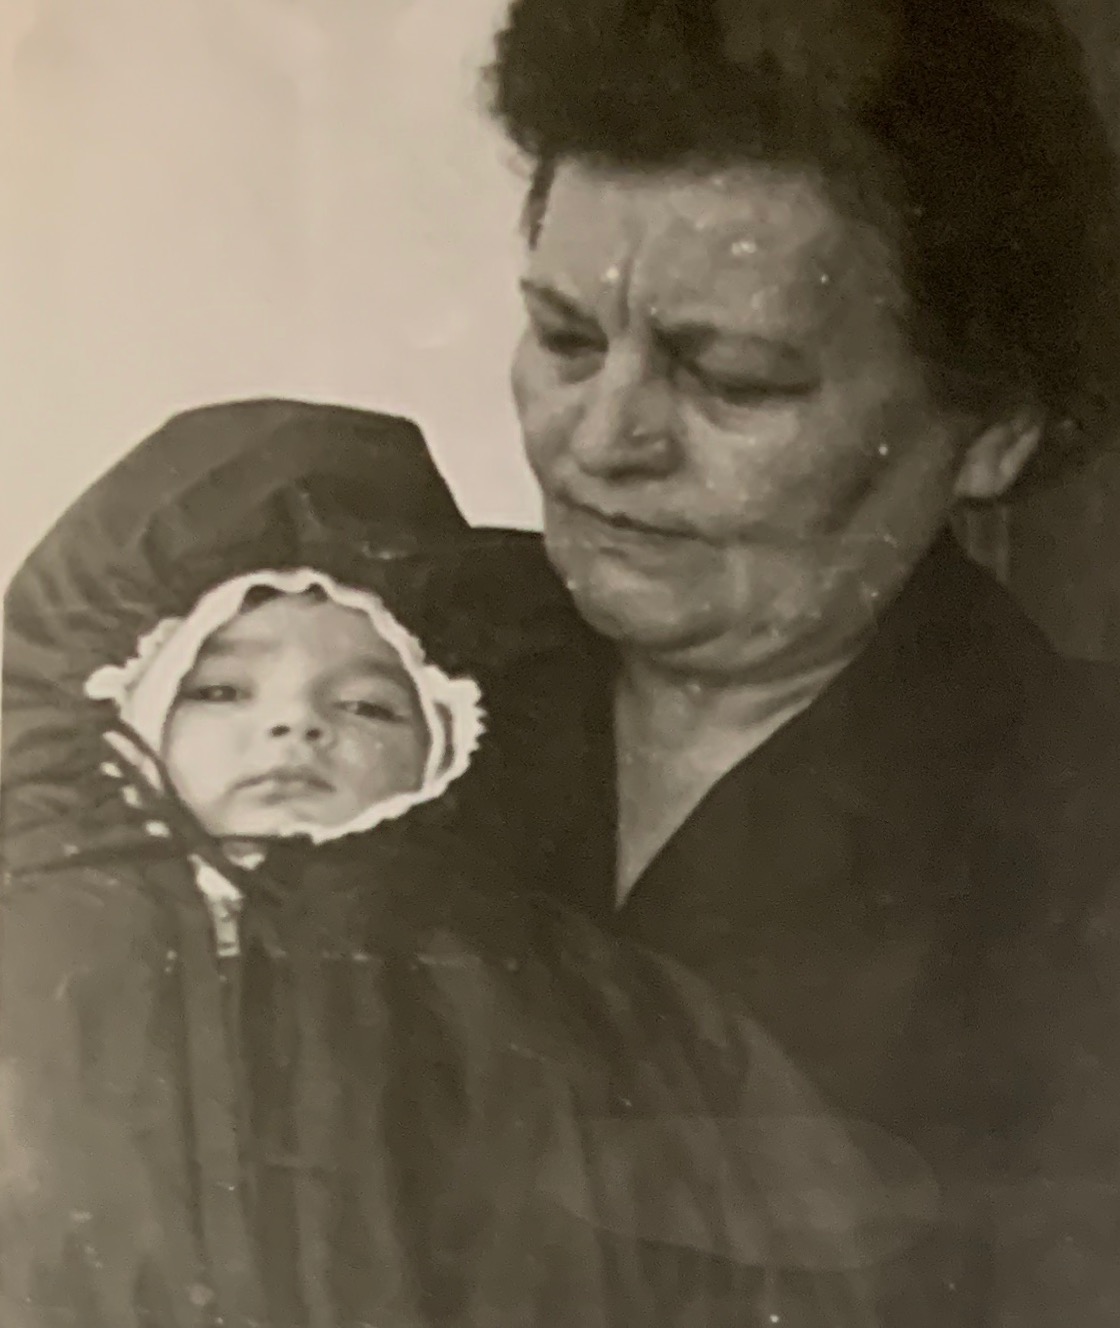 Me and my granma in România 1969